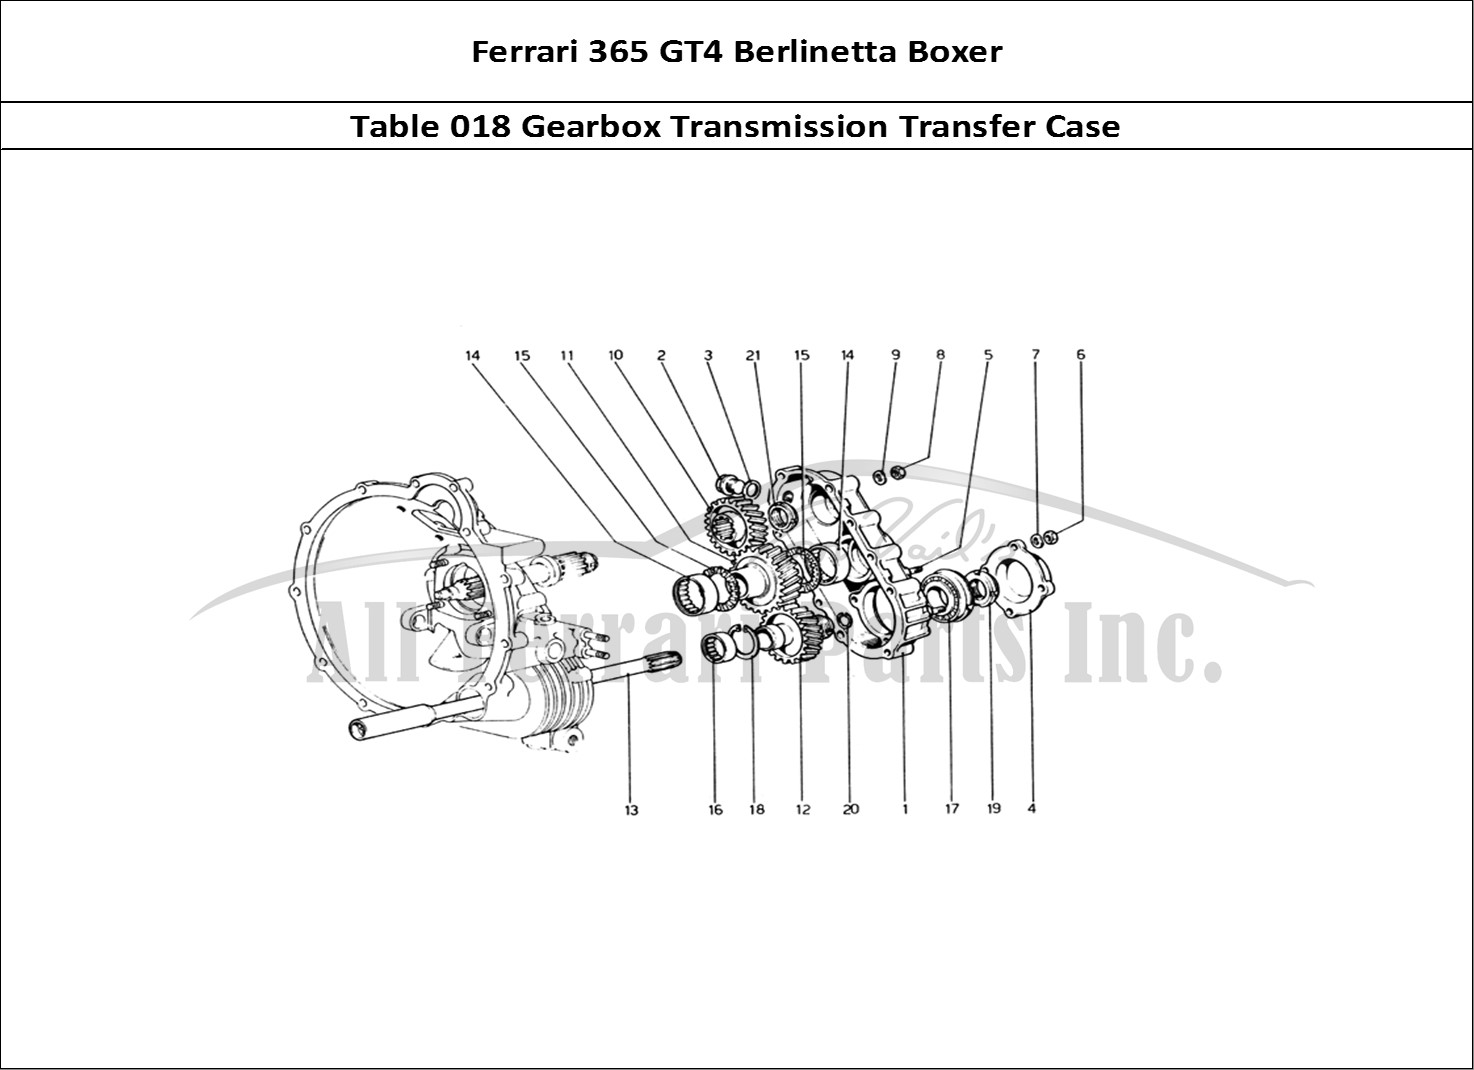 Ferrari Parts Ferrari 365 GT4 Berlinetta Boxer Page 018 Gearbox Transmission